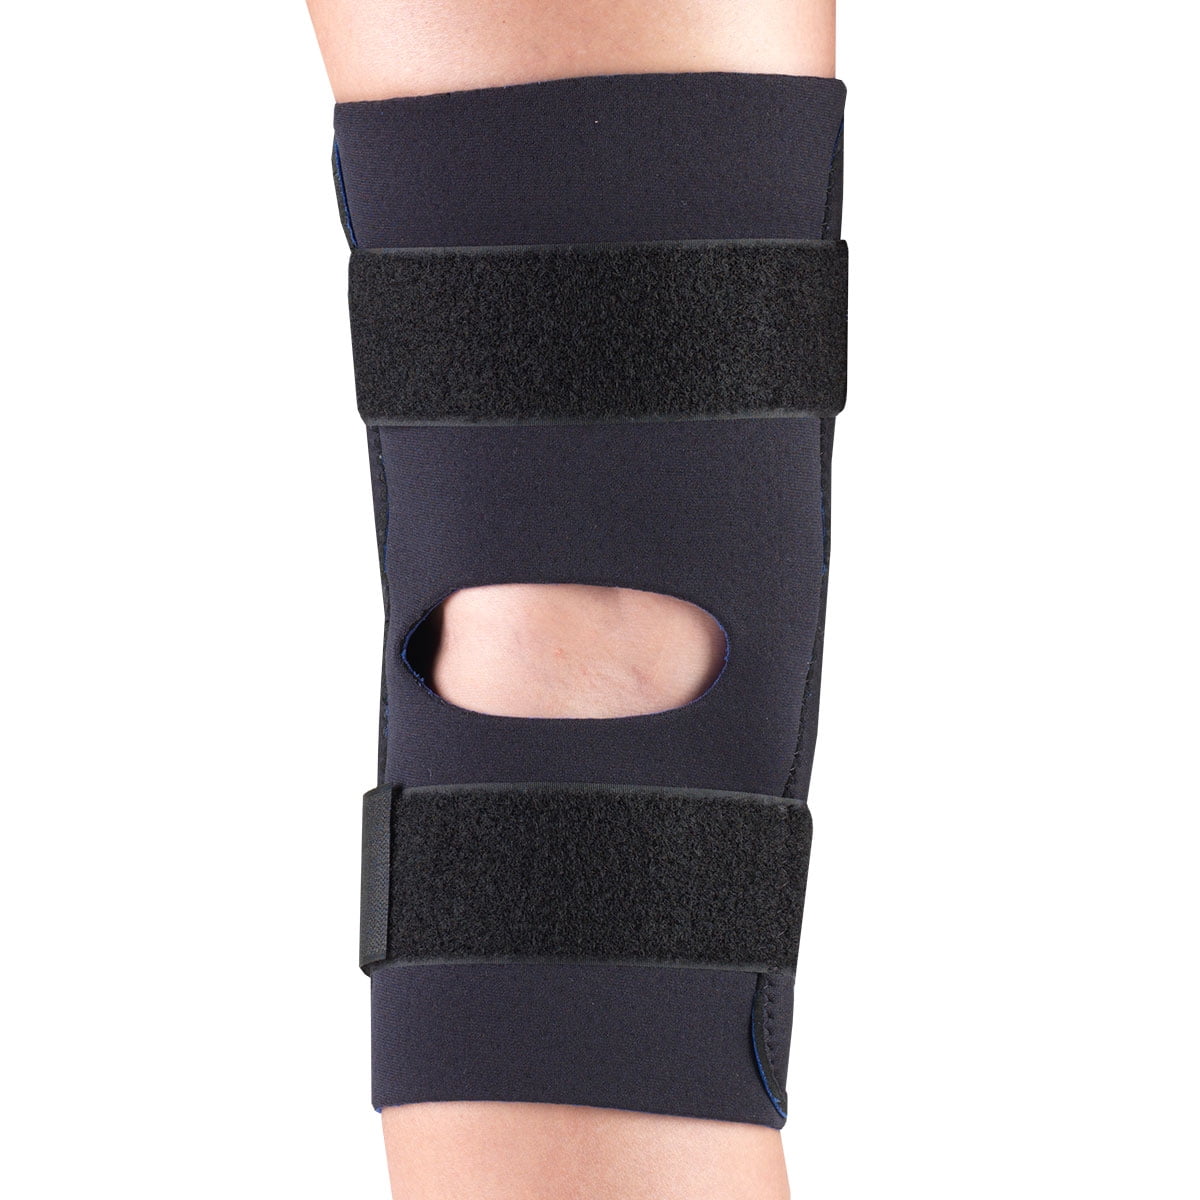 OTC Neoprene Knee Stabilizer Wrap - Hinged Bars, Black, Large